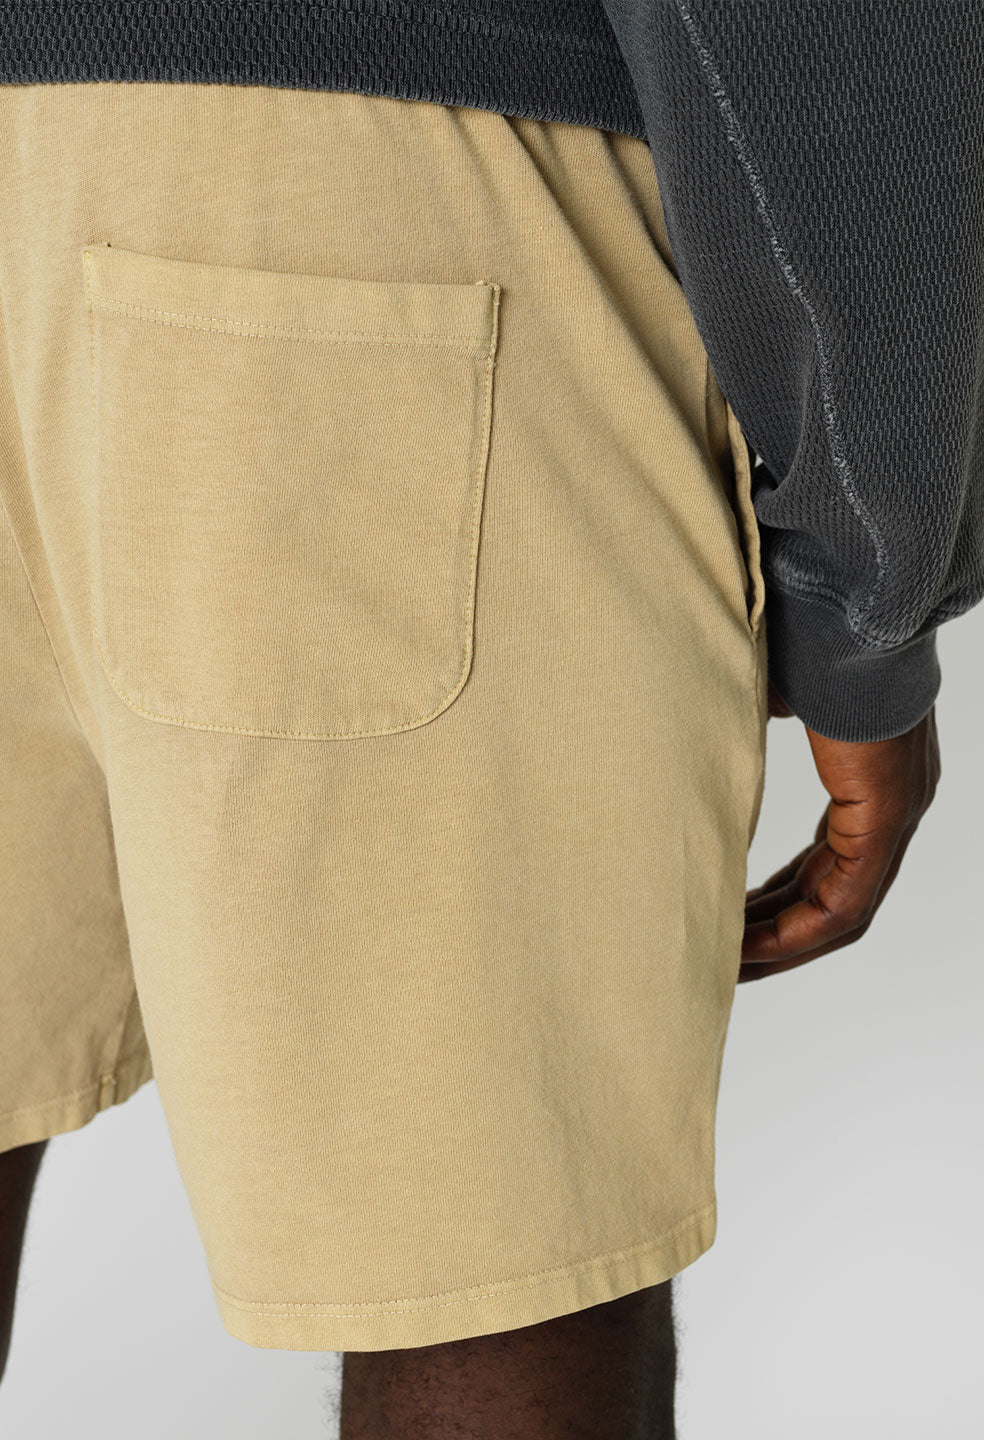 Replica Jersey Shorts / Vintage Tan